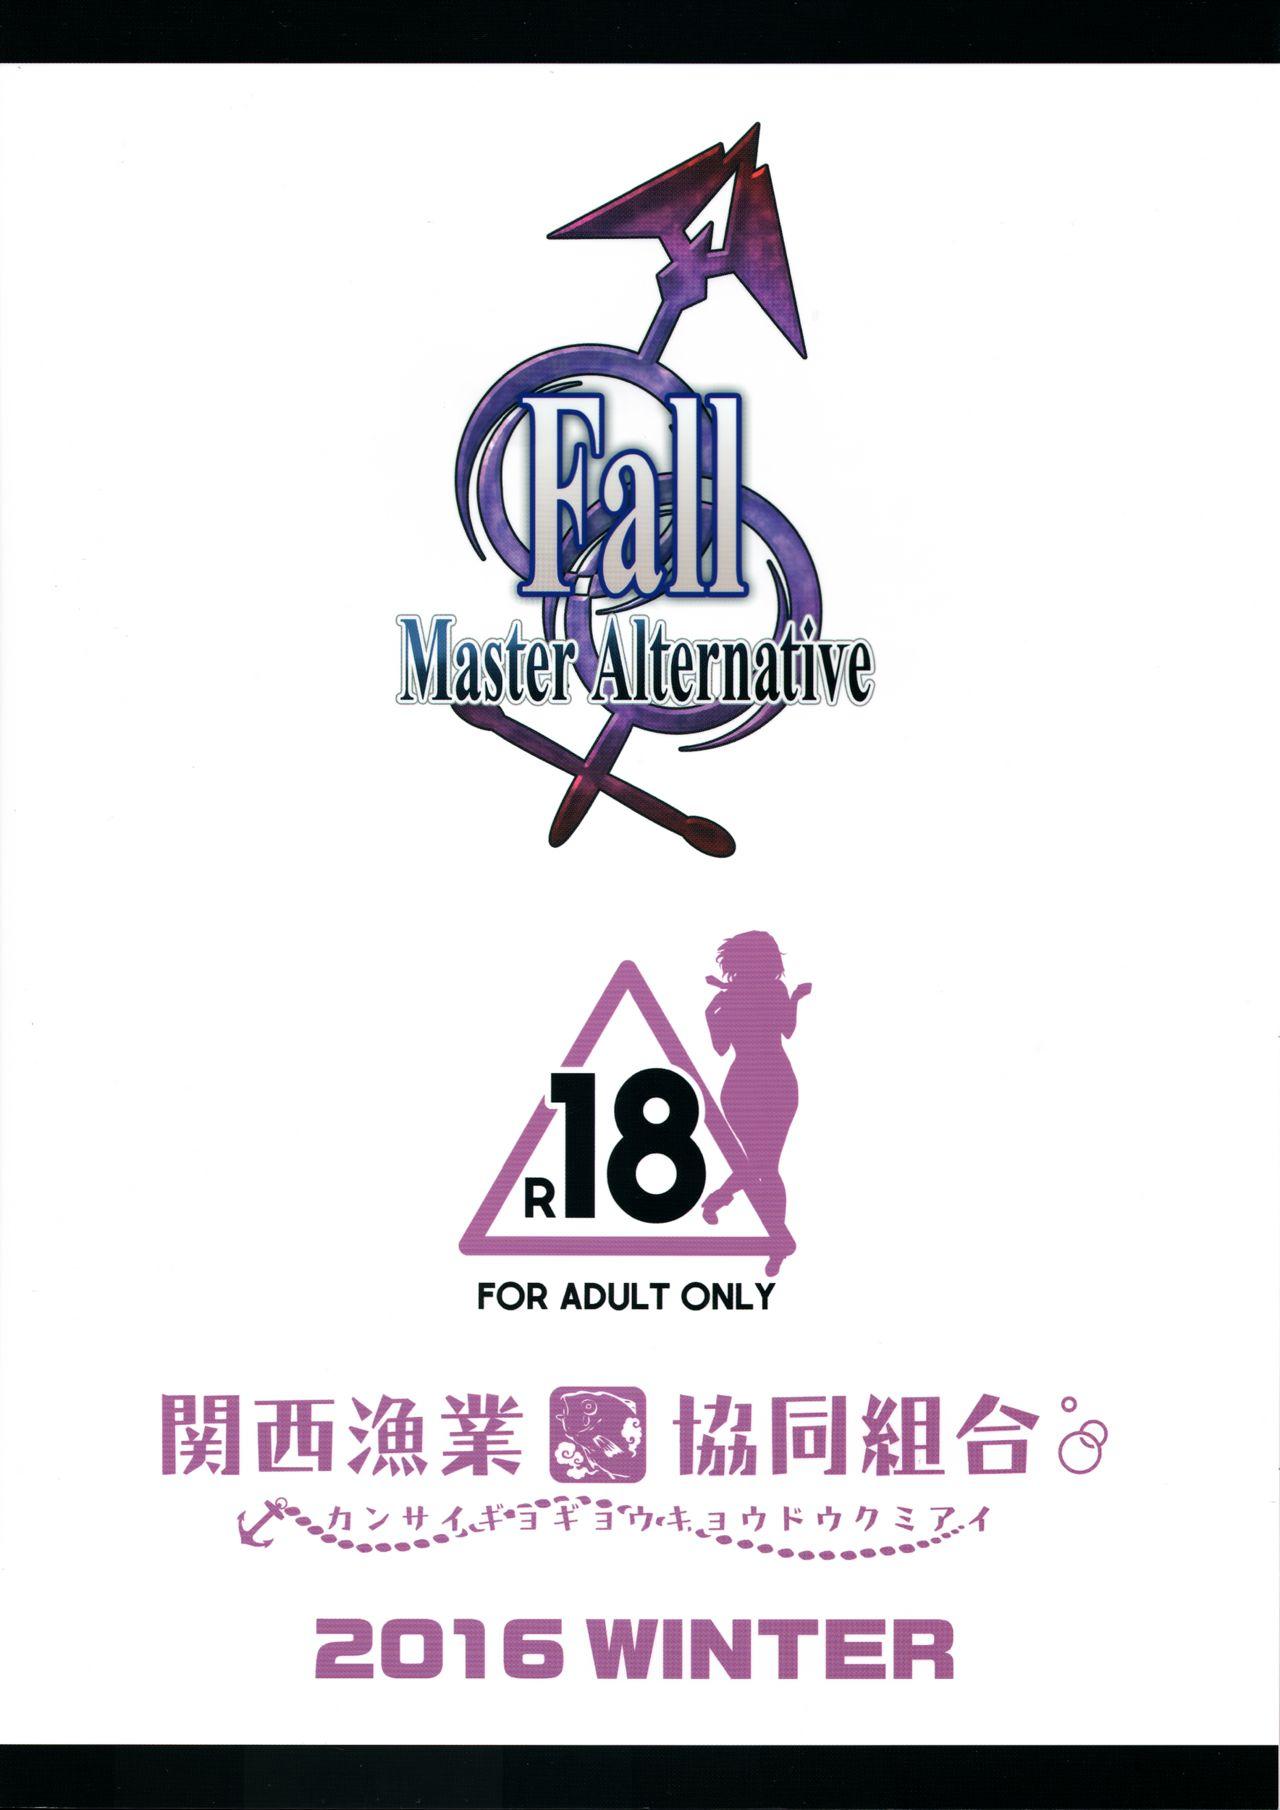 Fall/Master Alternative 19